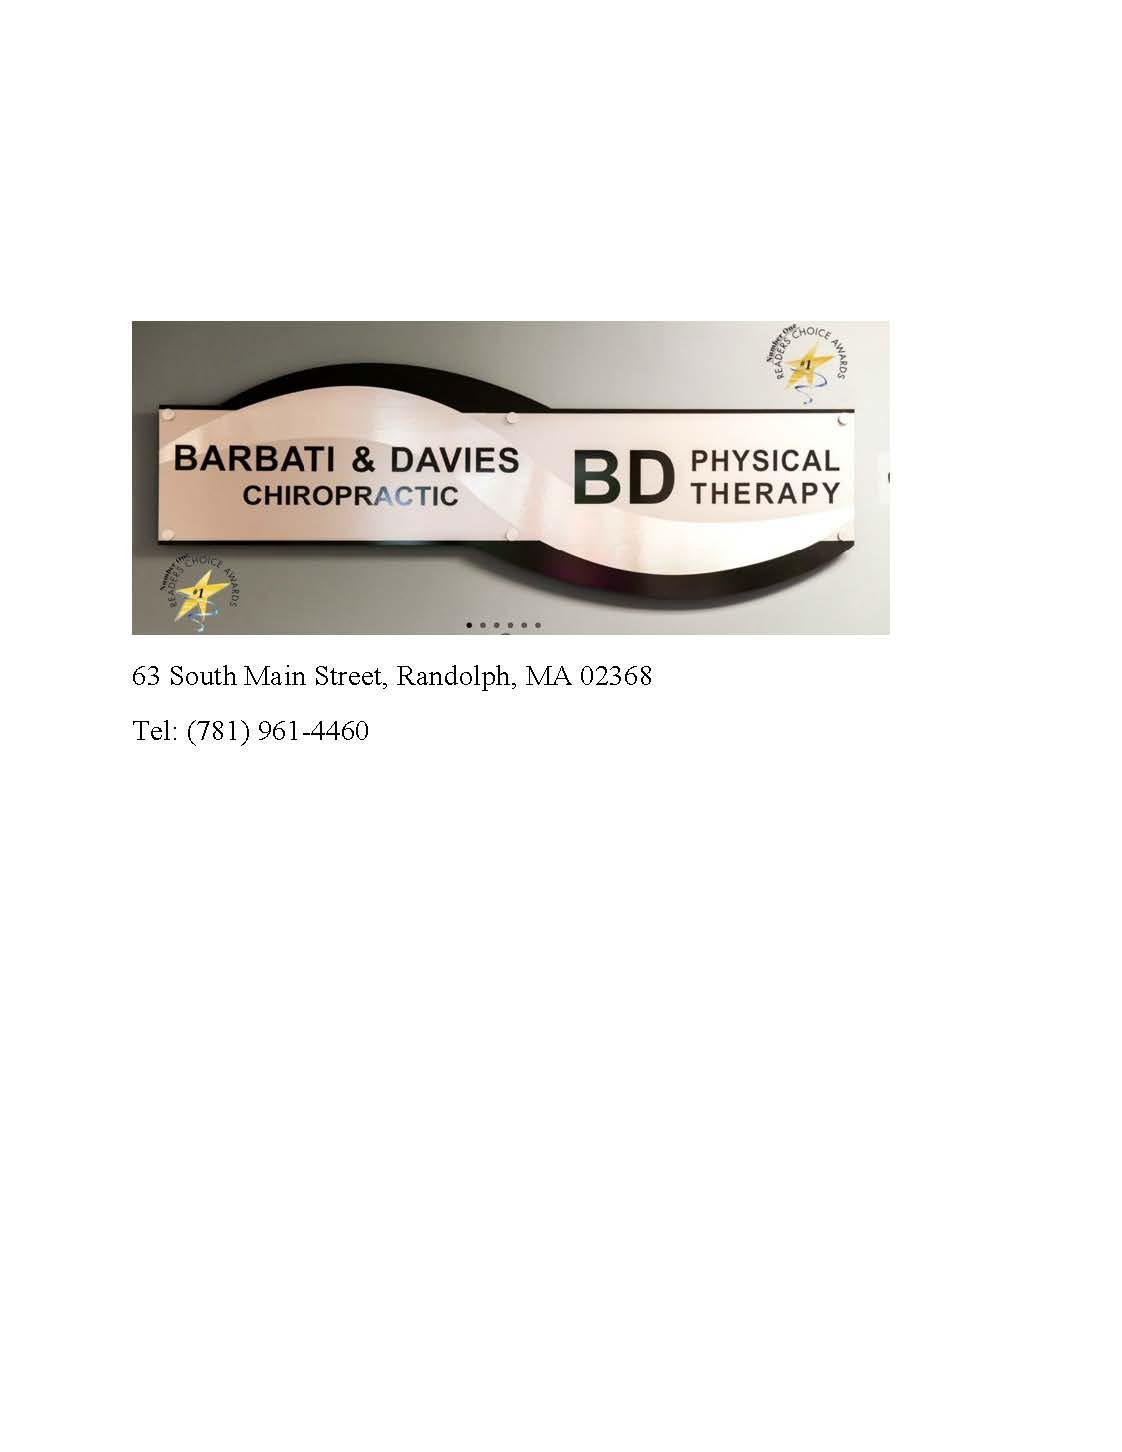  Barbati & Davies Chiropractic Offices